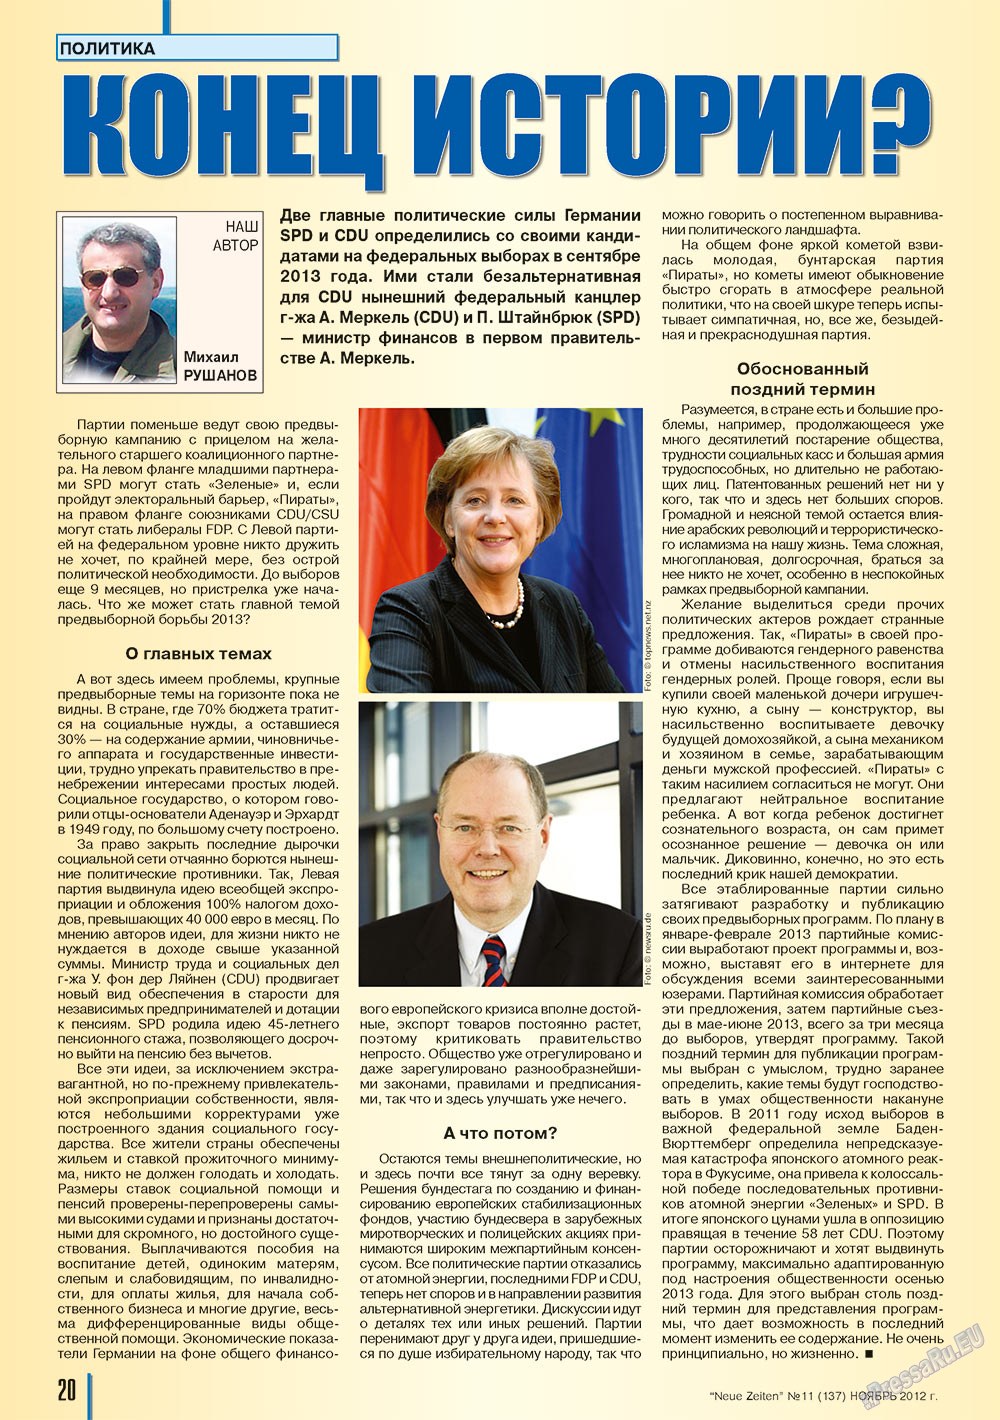 Neue Zeiten (журнал). 2012 год, номер 11, стр. 20